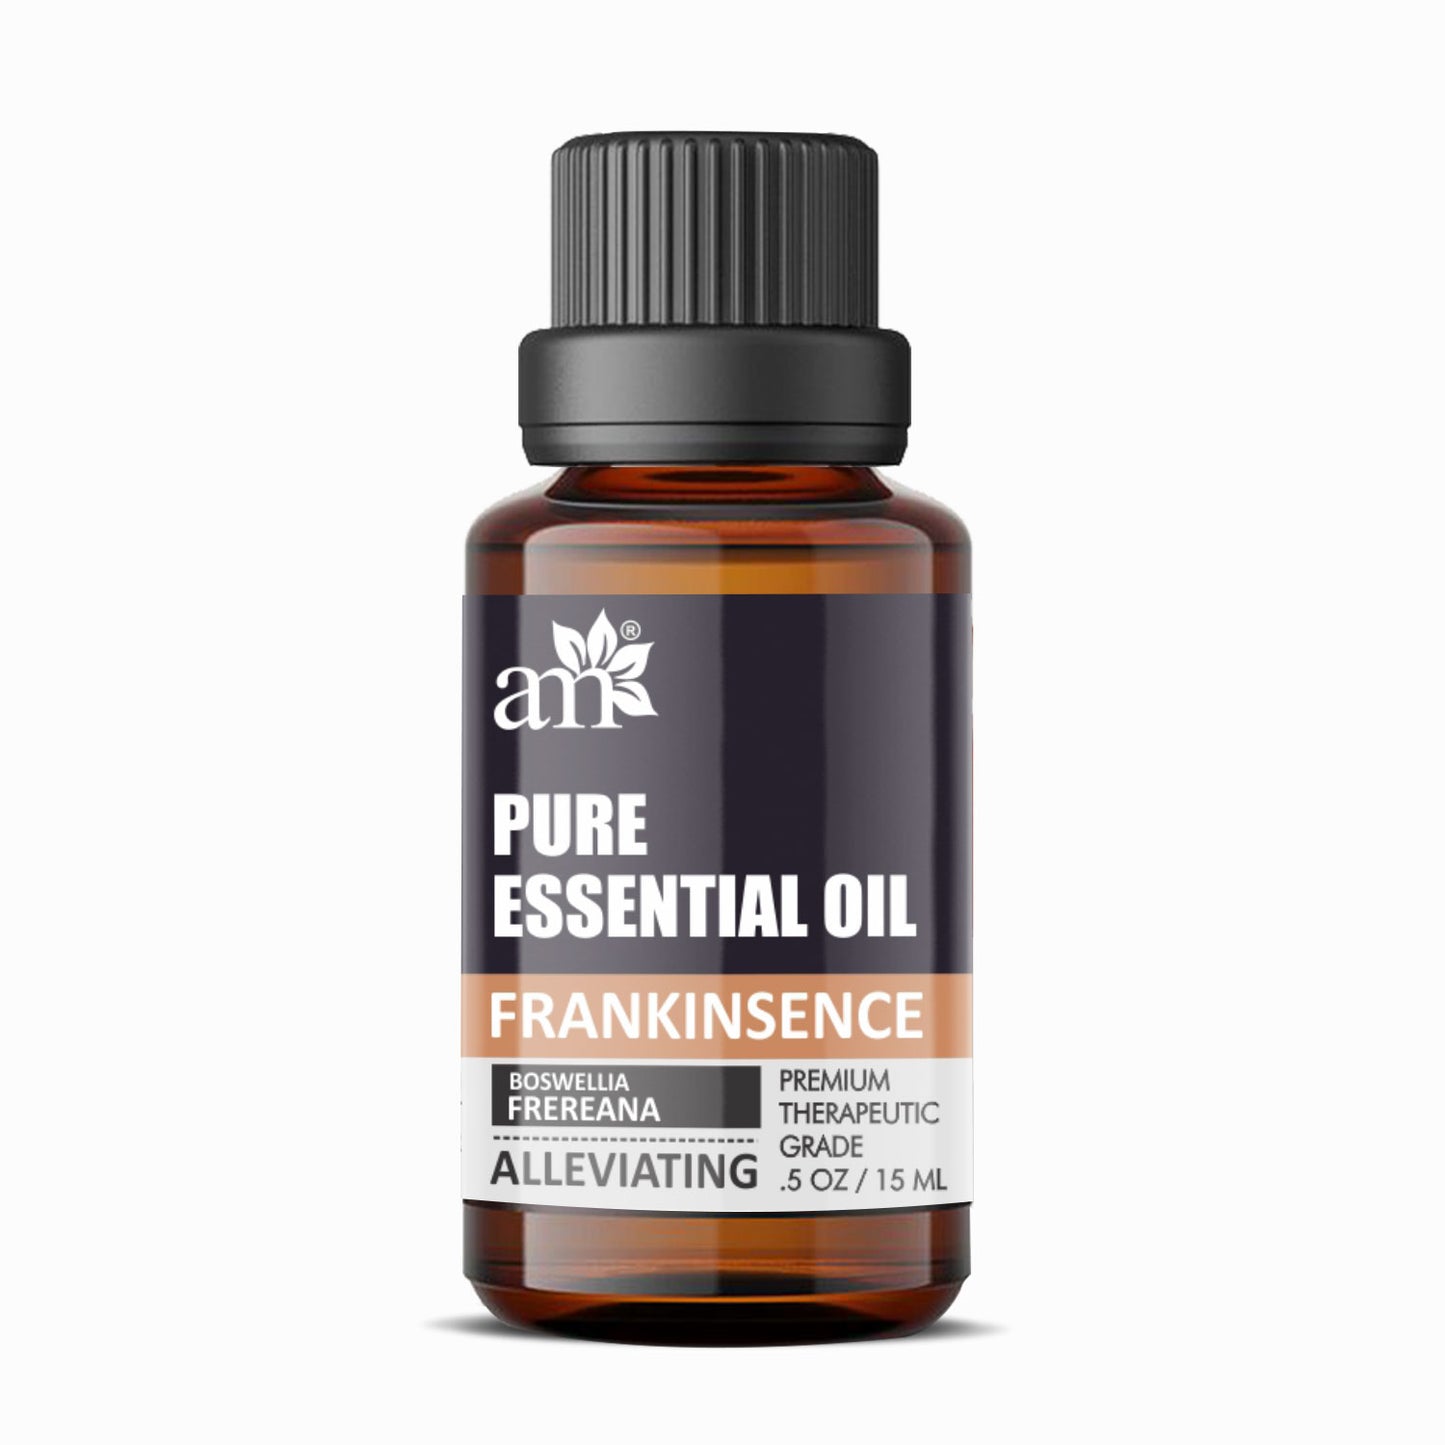 Frankinsence - Alleviating - Boswellia Frereana Pure Aroma Essential Oil, 15ml